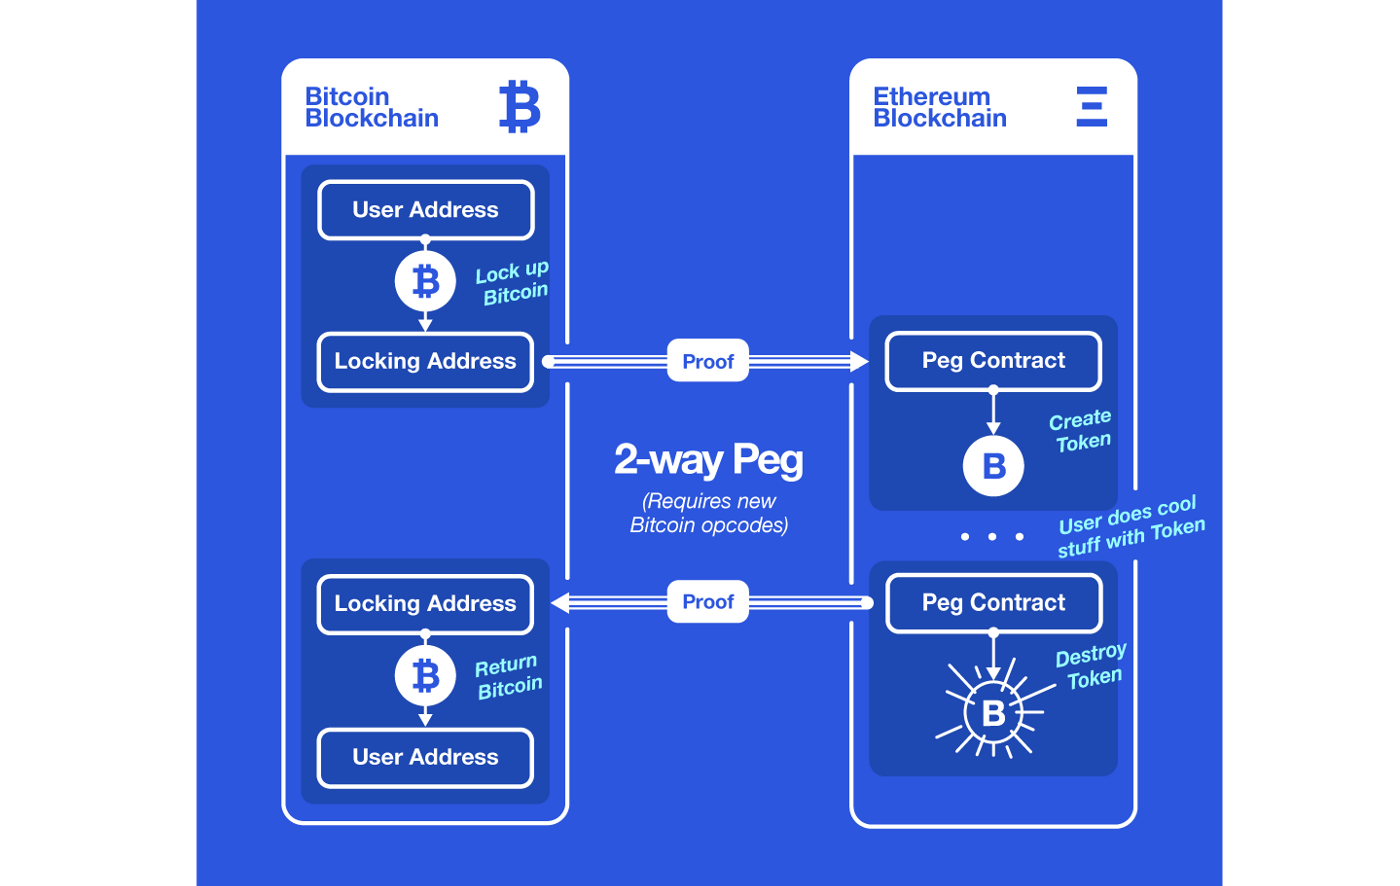 2-way peg of Bitcoin and Ethereum